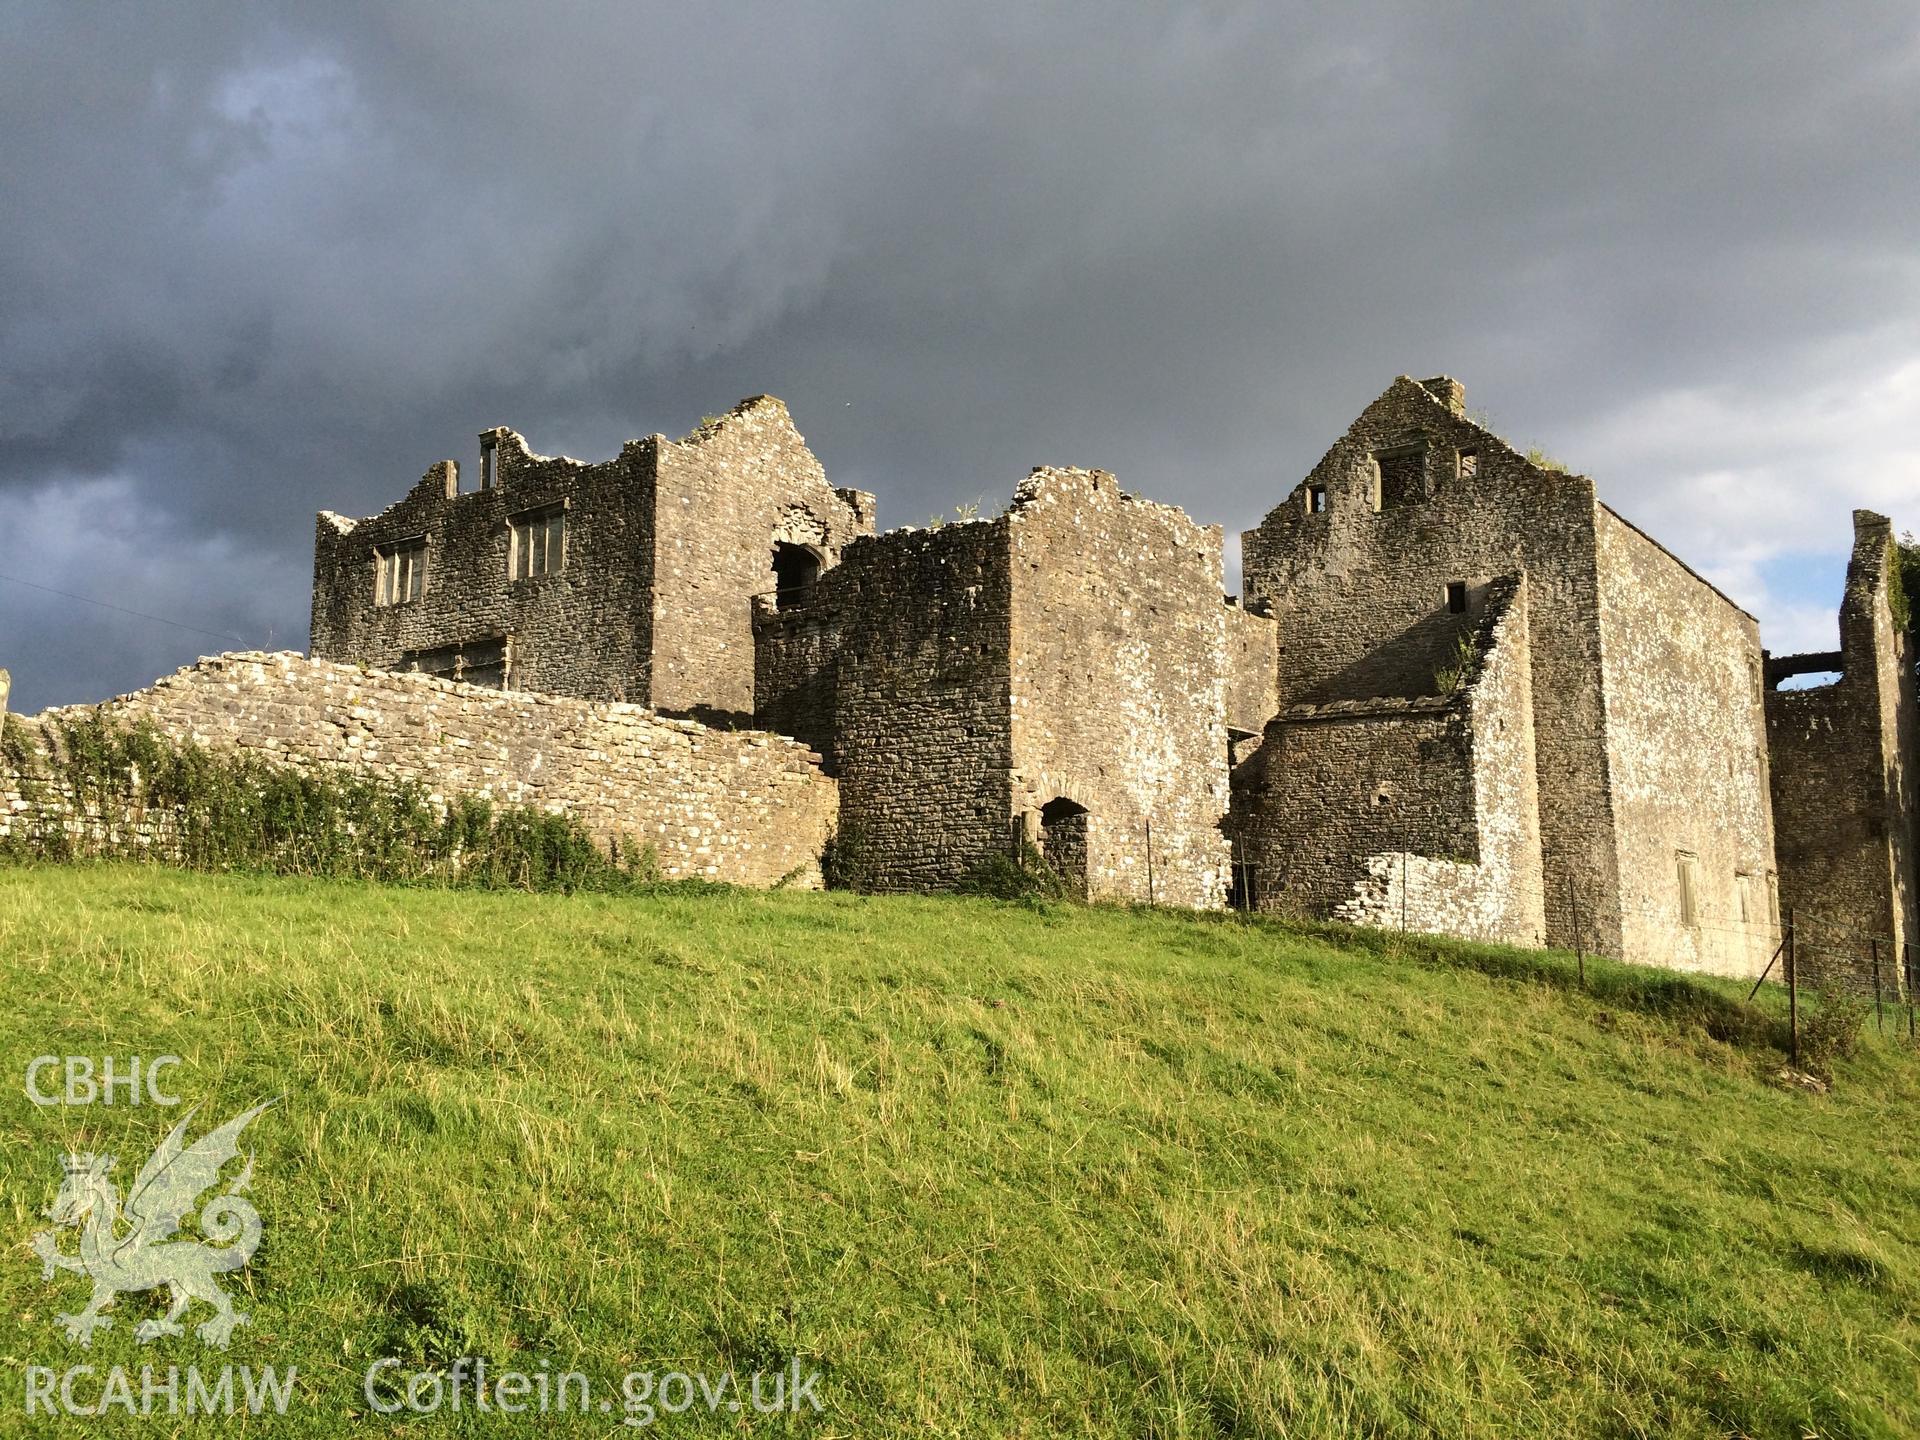 Colour photo showing Beaupre Castle, produced by  Paul R. Davis,  8th August 2016.